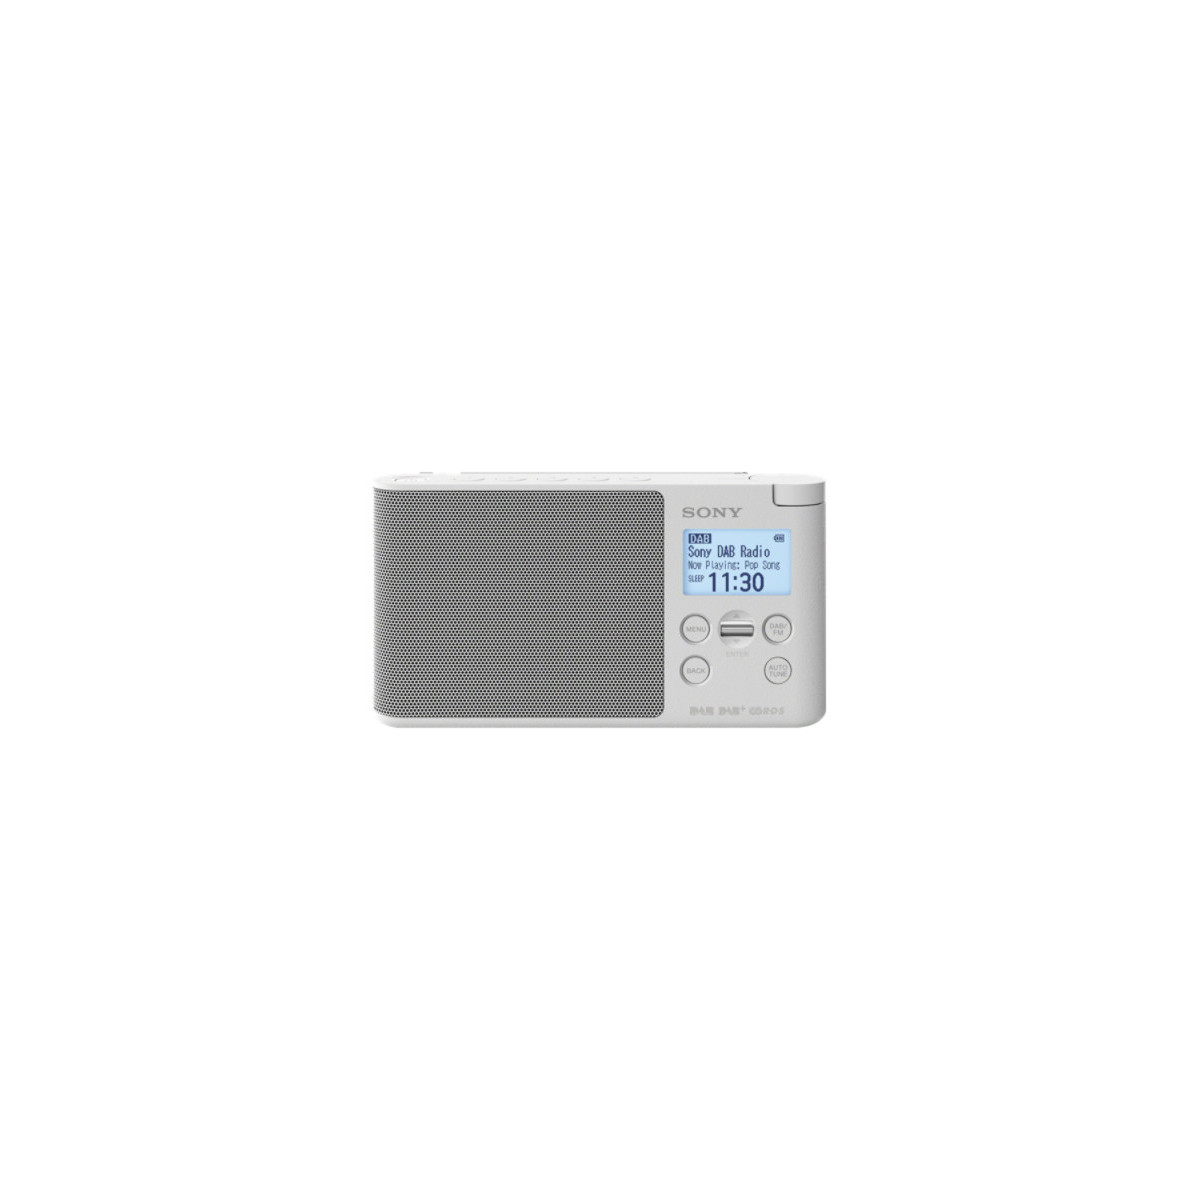 Sony XDR-S41D radio Portatile Digitale Bianco